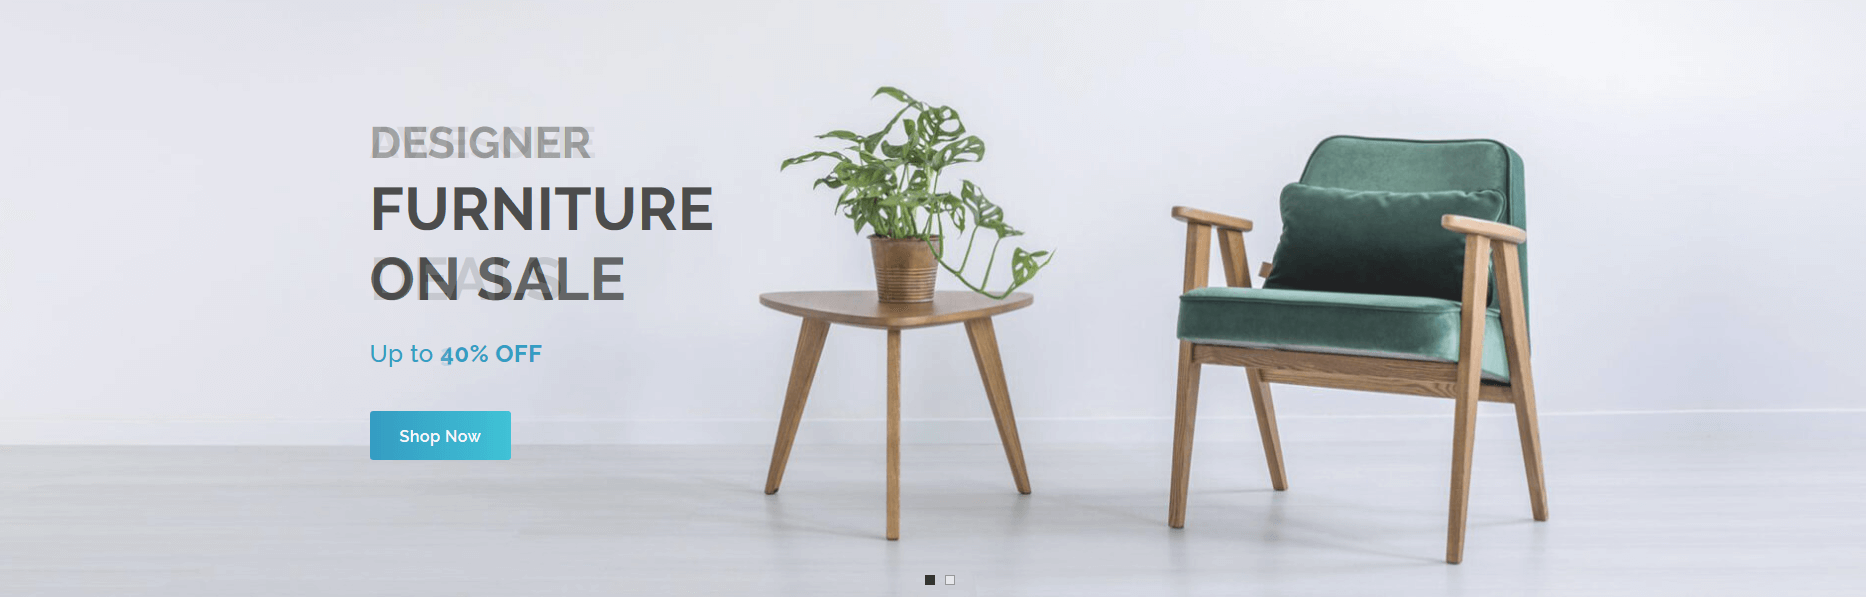 DeskPlus - Furniture Slider